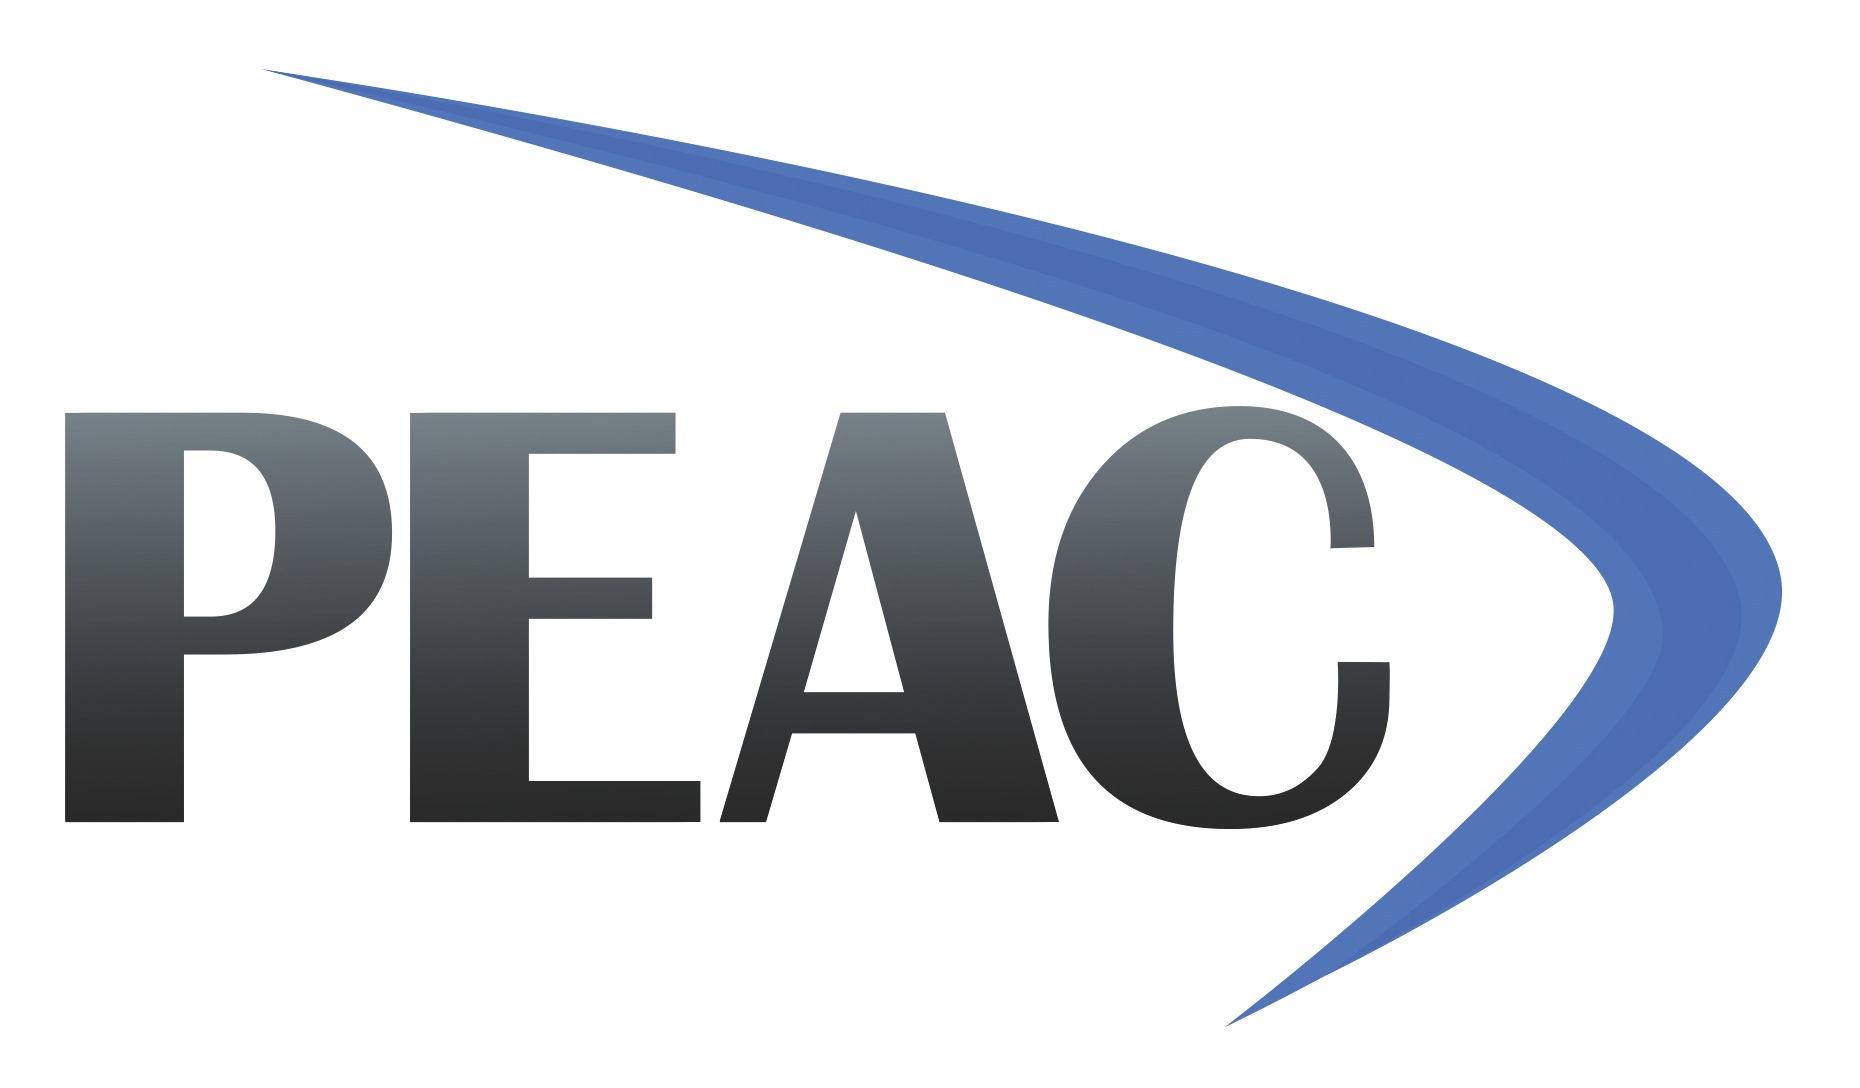 PEAC Logo